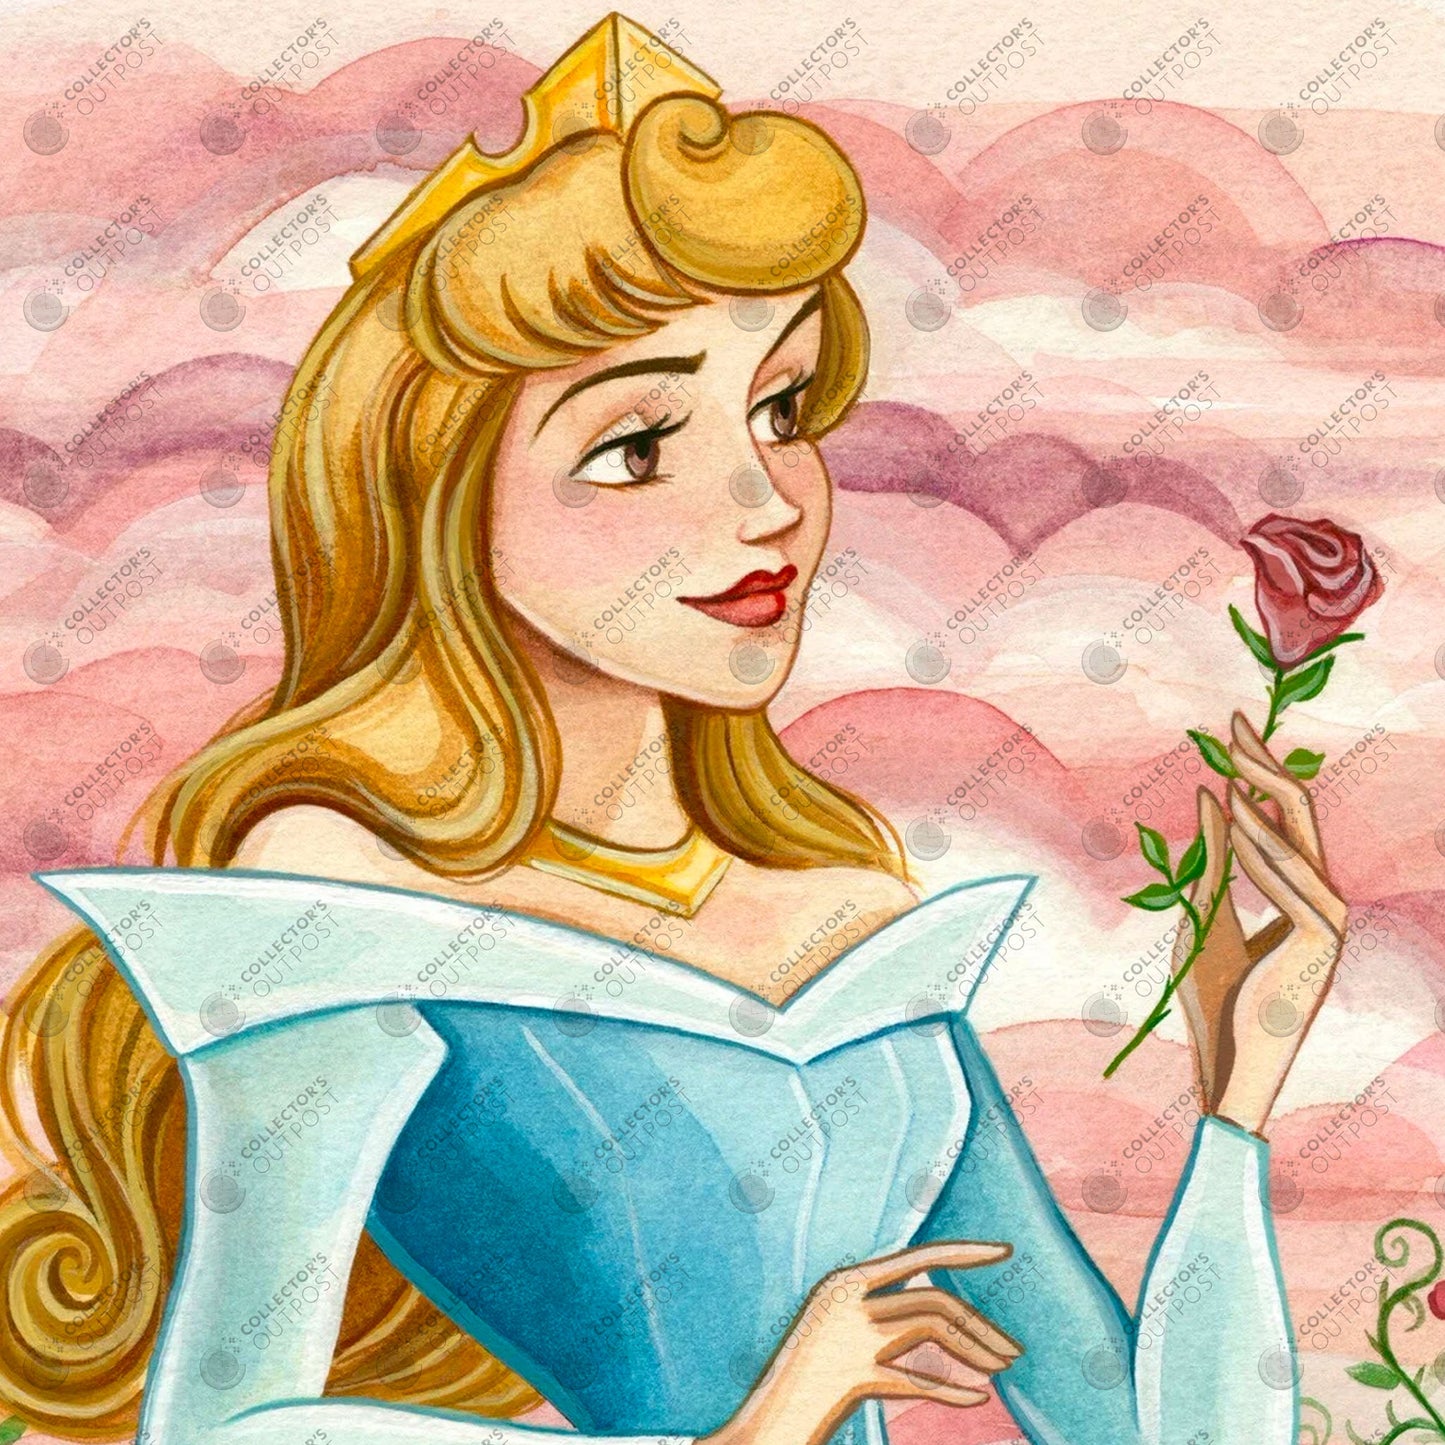 Princess Aurora (Sleeping Beauty) Disney Watercolor Art Print